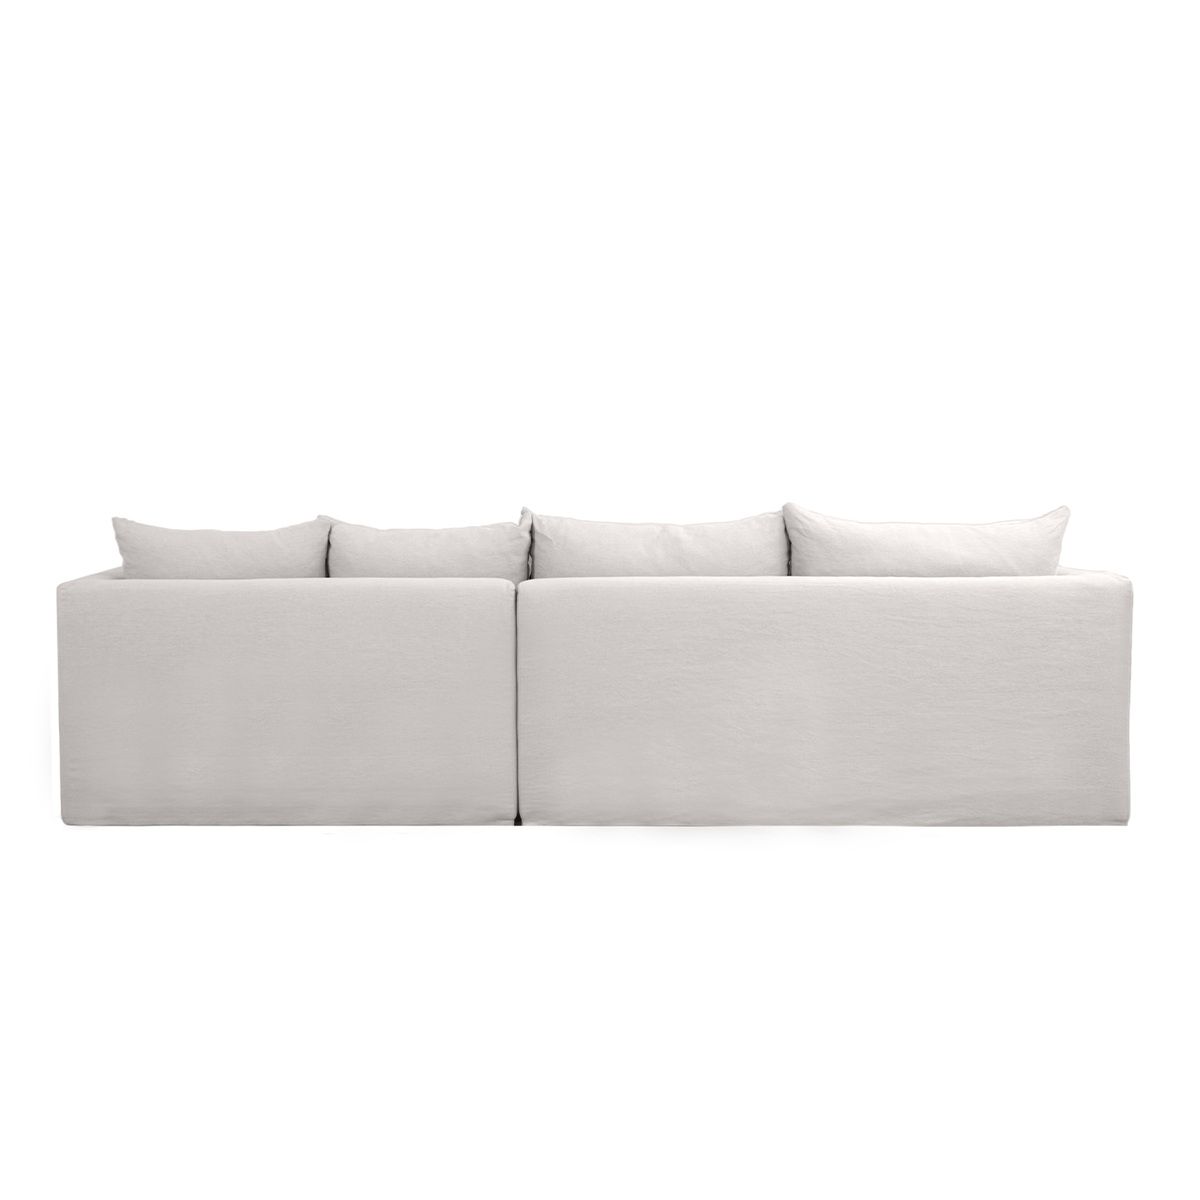 SuperBox corner sofa - Right angle, L300 x P180 x H85 cm - Linen - image 5